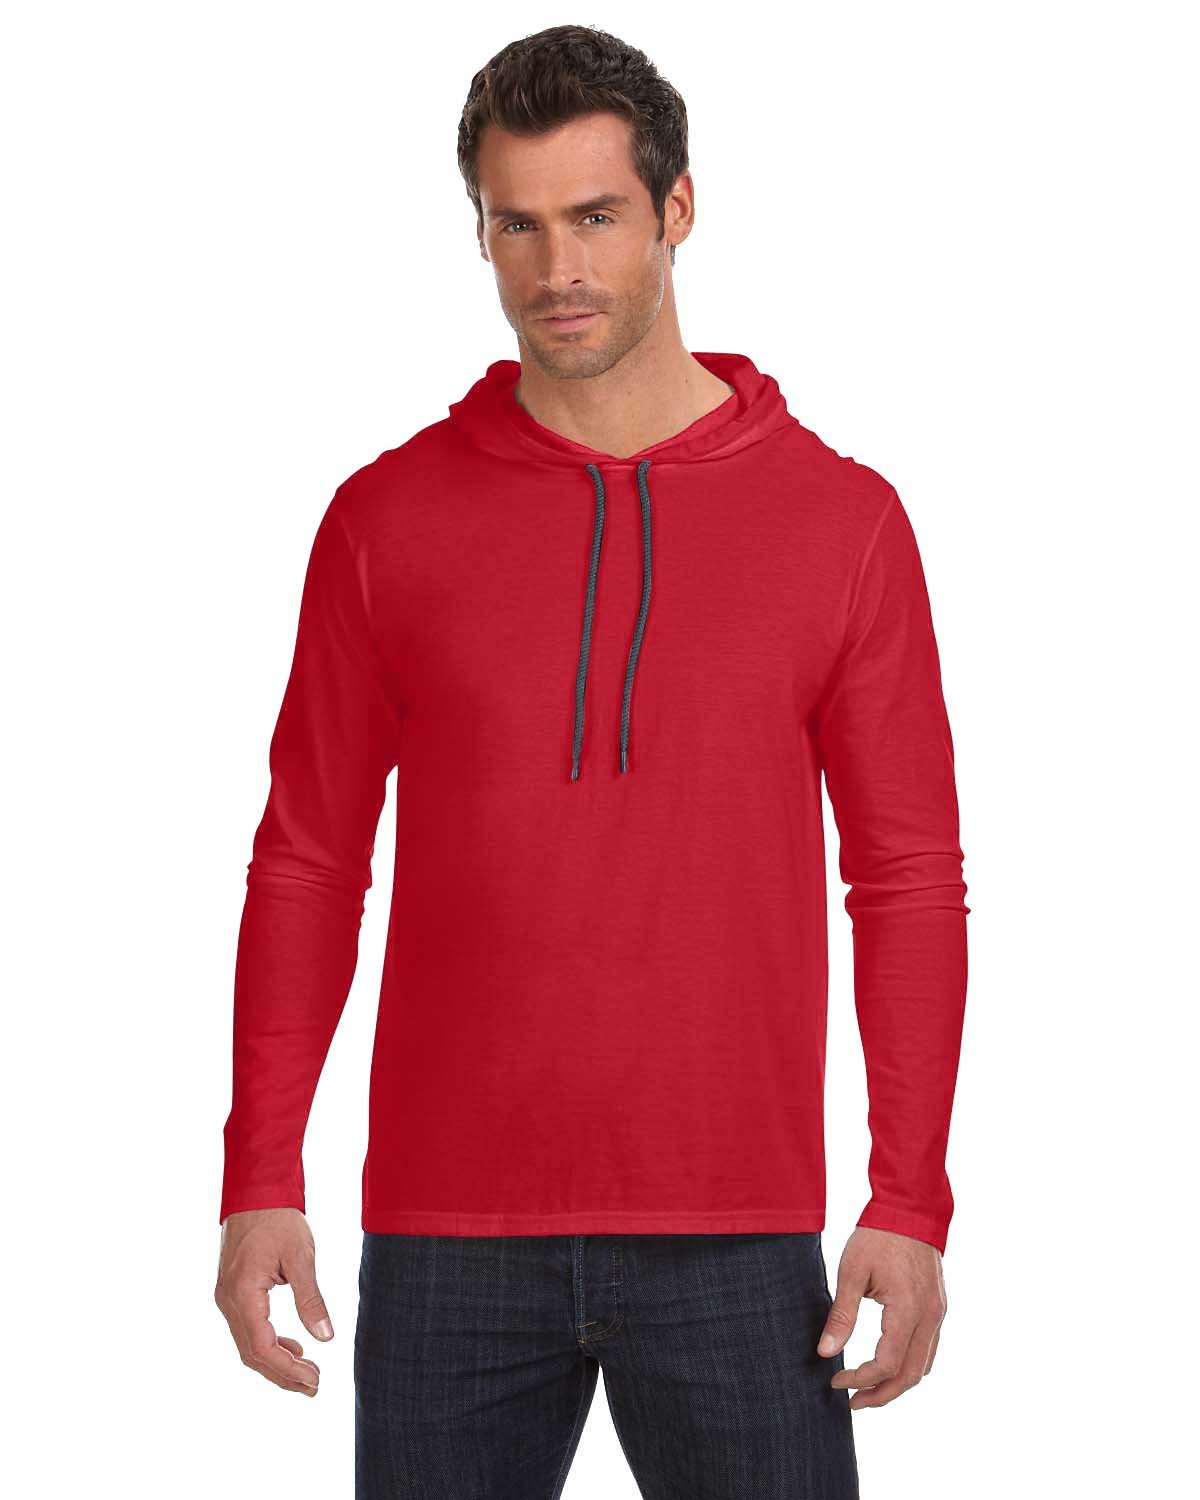 Anvil 987 - Lightweight Long Sleeve Hooded T-Shirt, Red/ Dark Grey, M